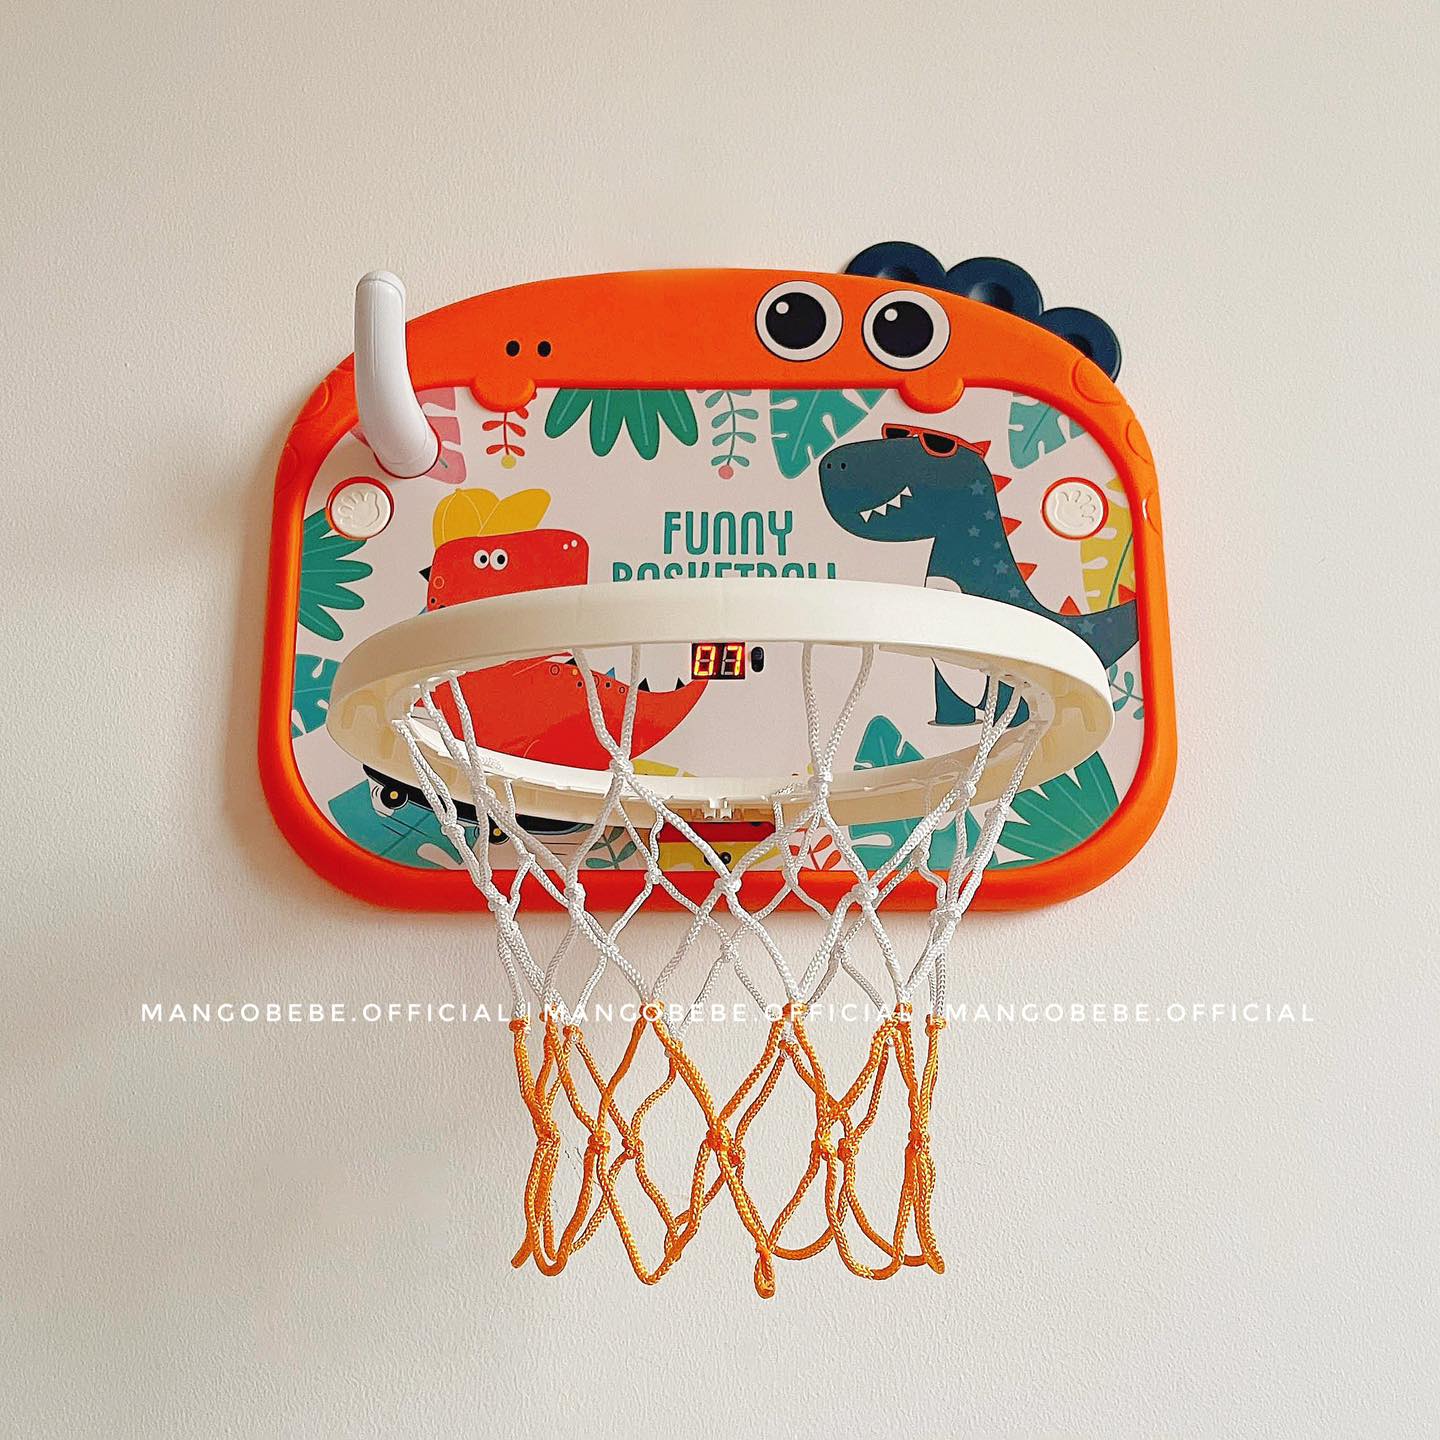 Set bóng rổ treo tường Funny Basketball